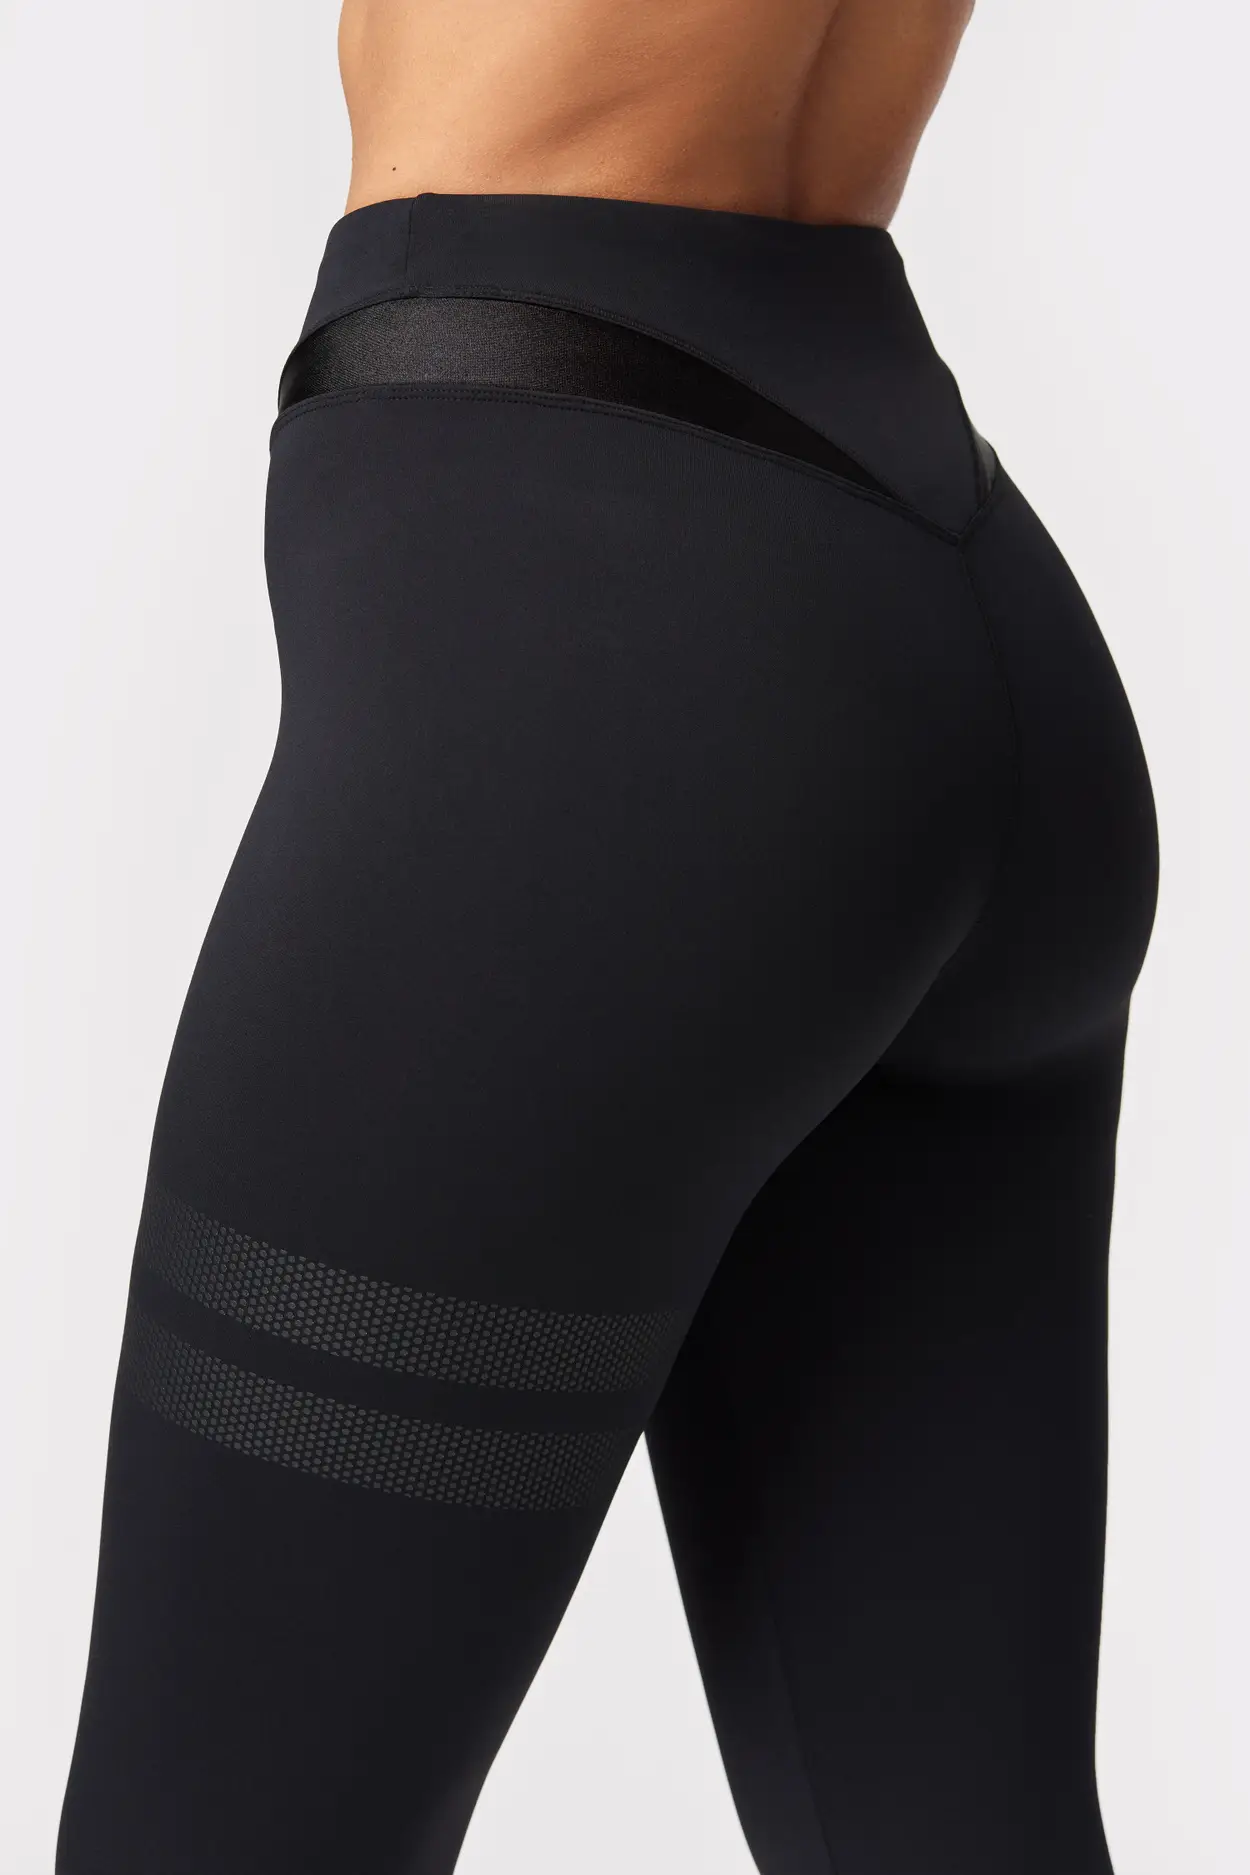 XS nike leg a see leggings in black - with patterned - Depop